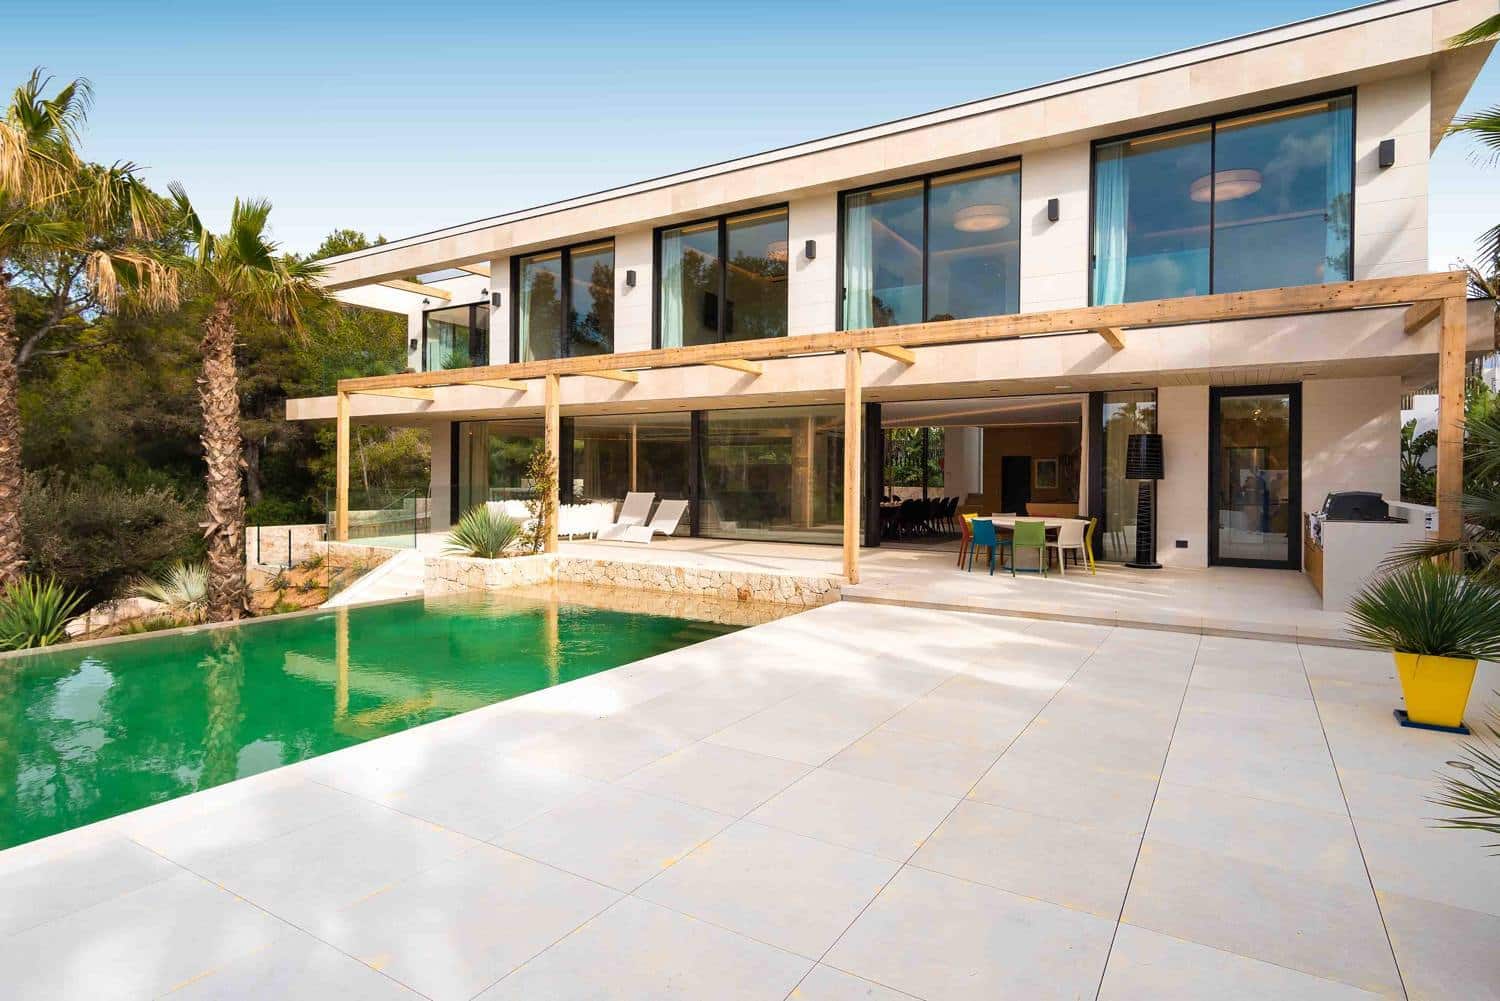 Impressive high-end villa in the quiet enclave of Nova Santa Ponsa